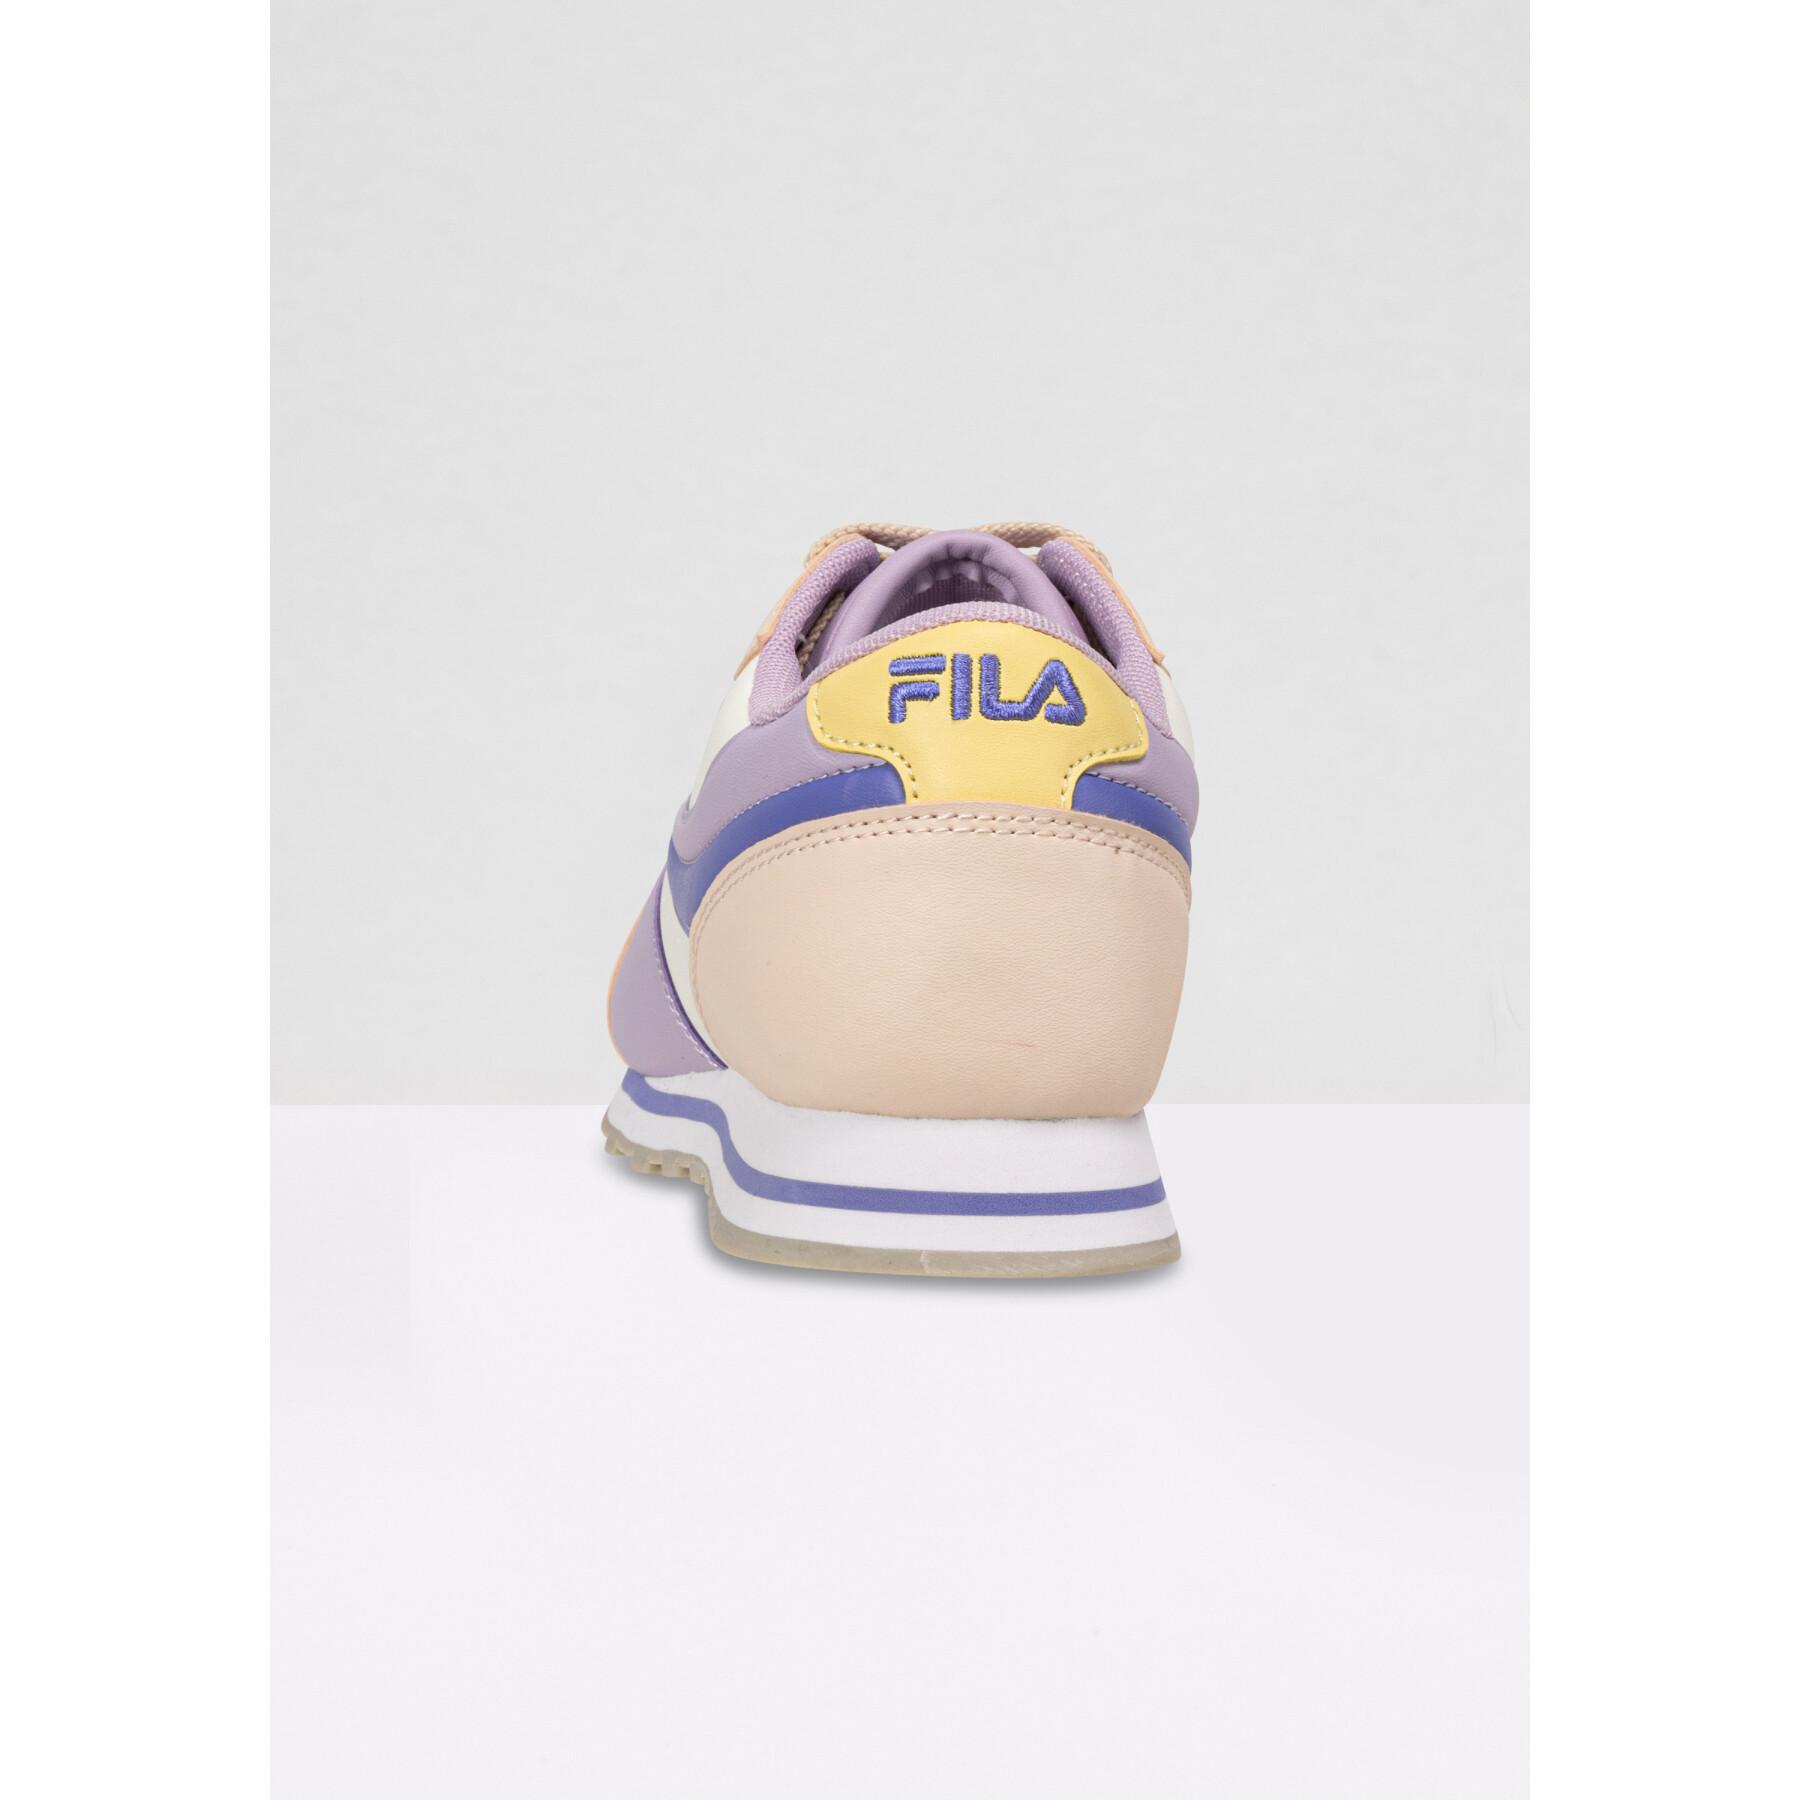 Children's sneakers Fila Orbit - Fila - Brands - Lifestyle